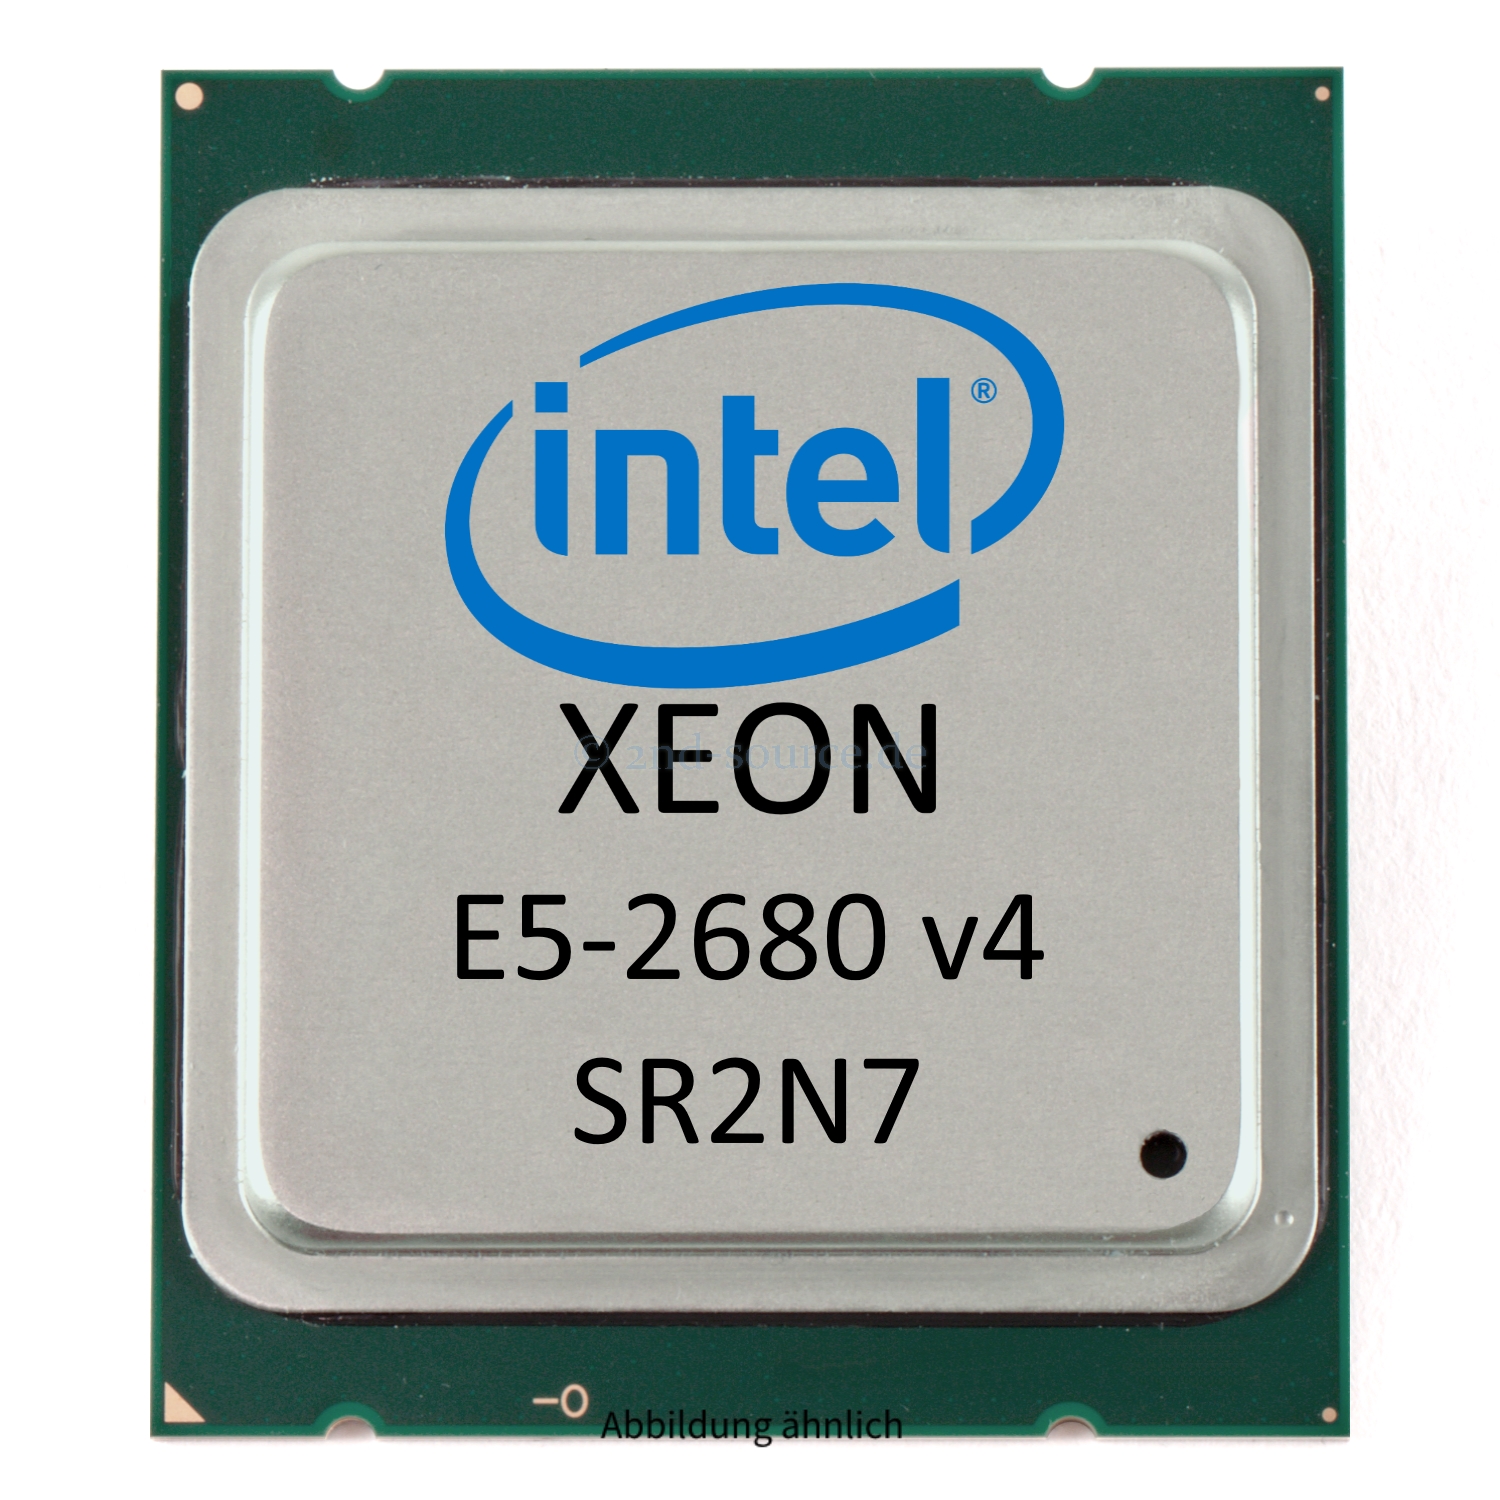 Intel Xeon E5-2680 v4 2.40GHz 35MB 14-Core CPU 120W SR2N7 CM8066002031501